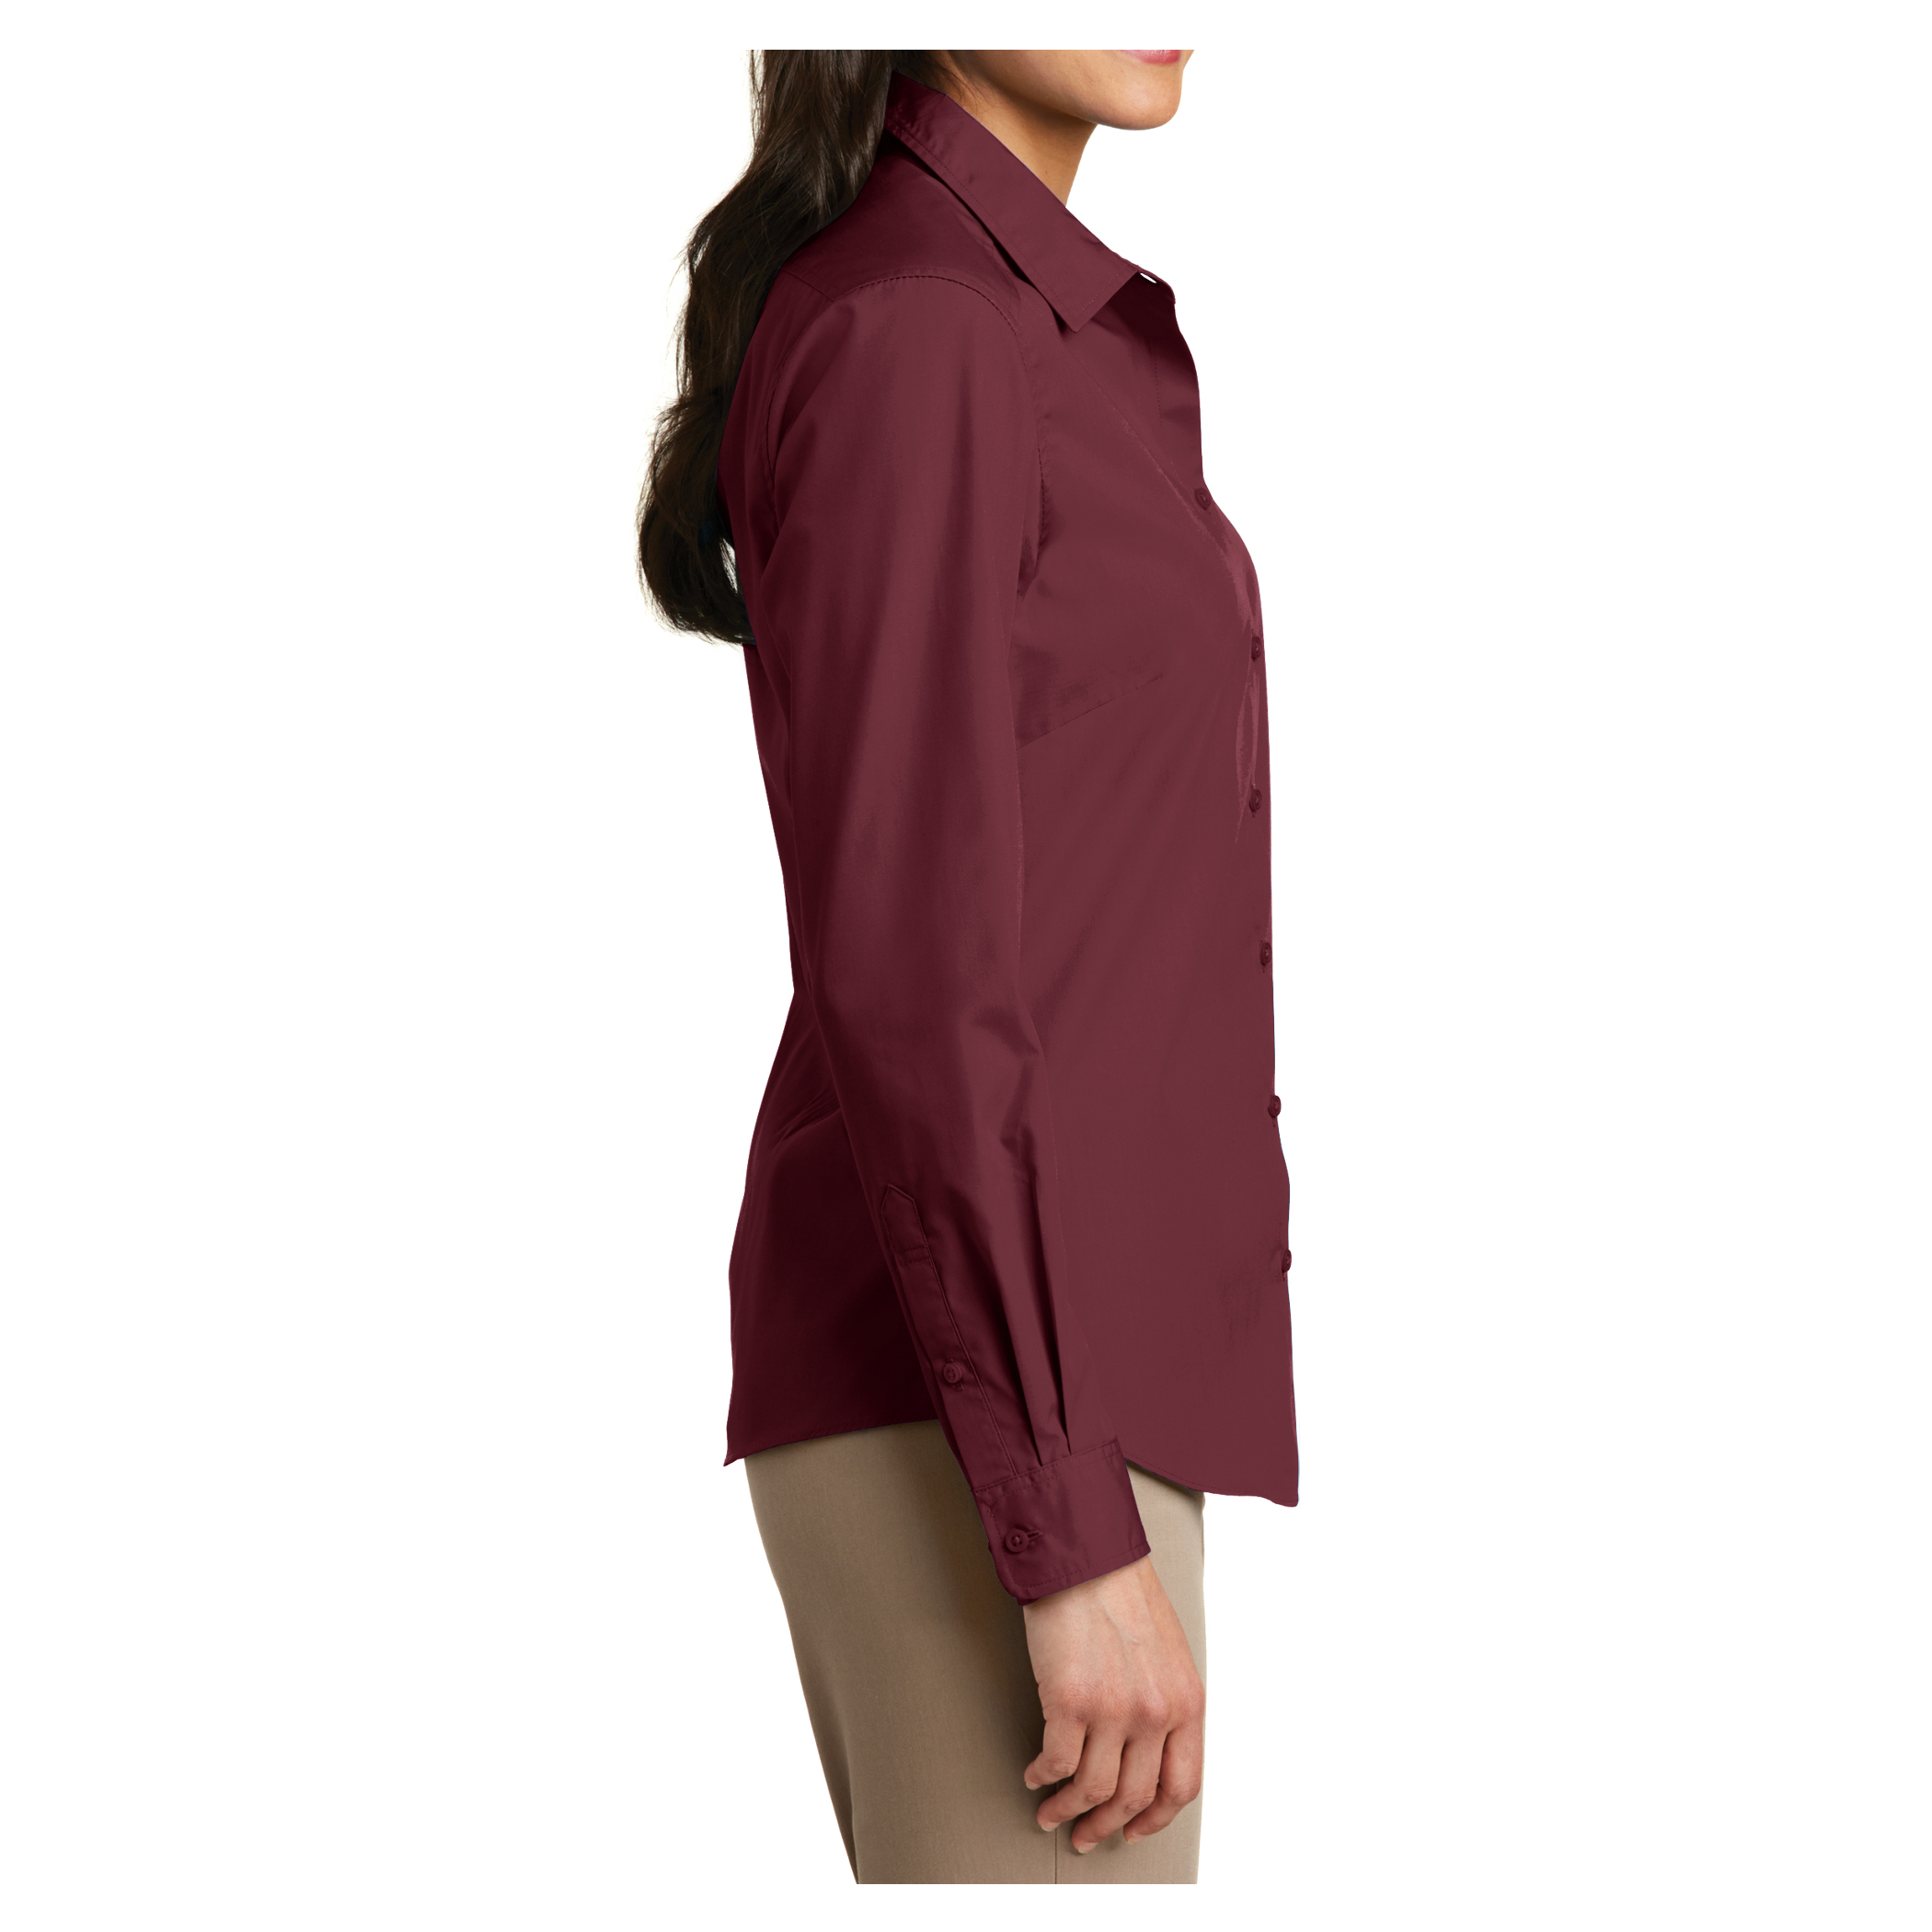 Mafoose Women Cotton/Polyester Female Shirt Burgundy XS - image 4 of 6